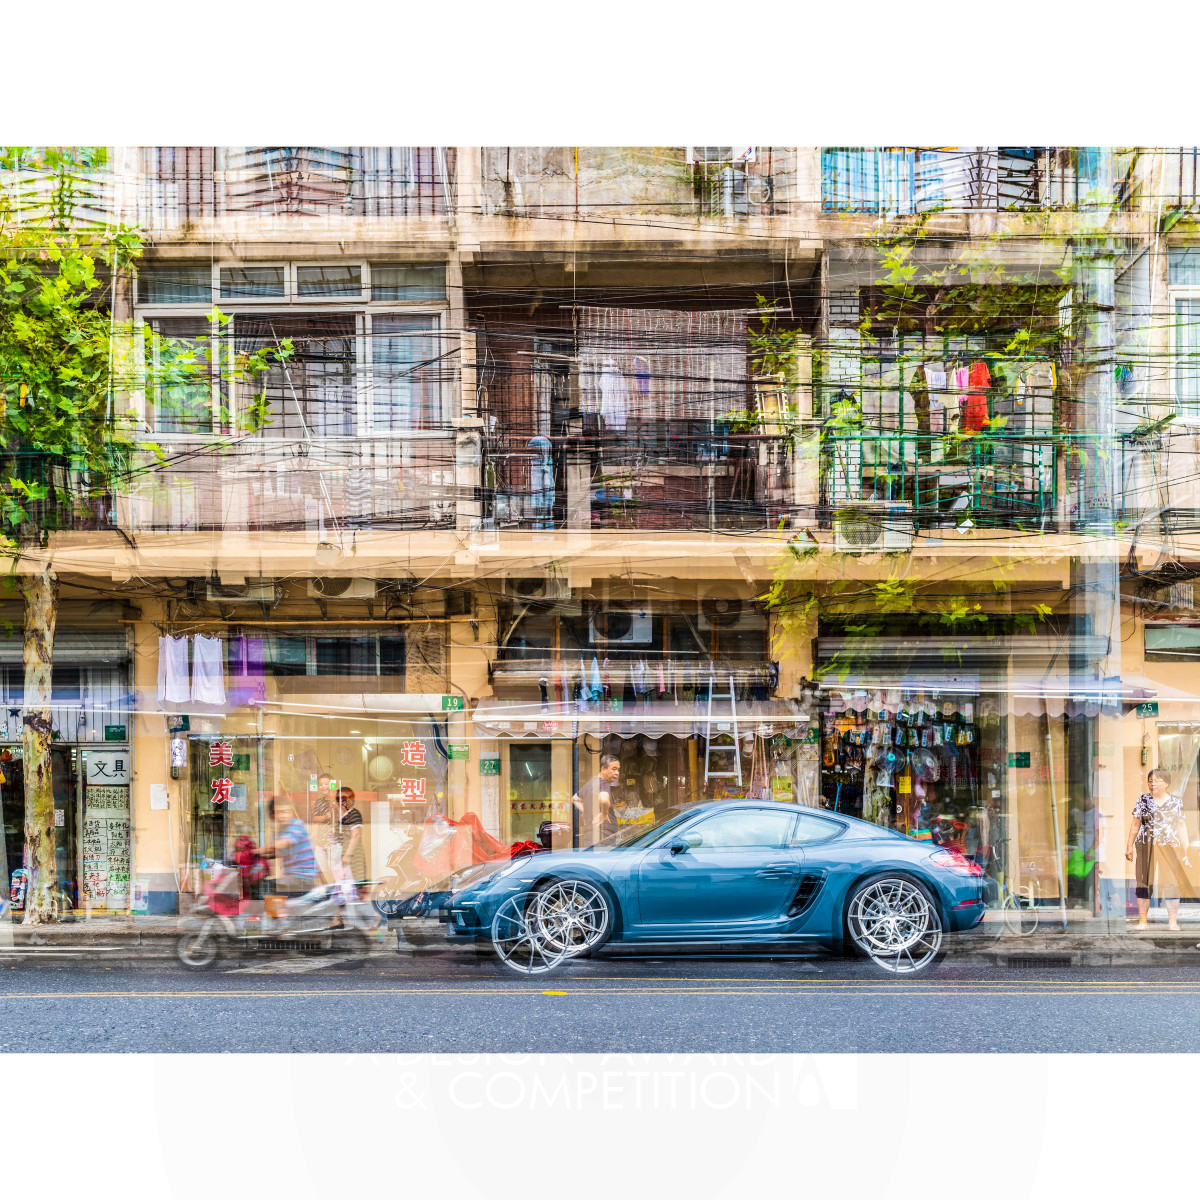 Multivision Porsche Shanghai Photography Artwork by Florian W. Mueller